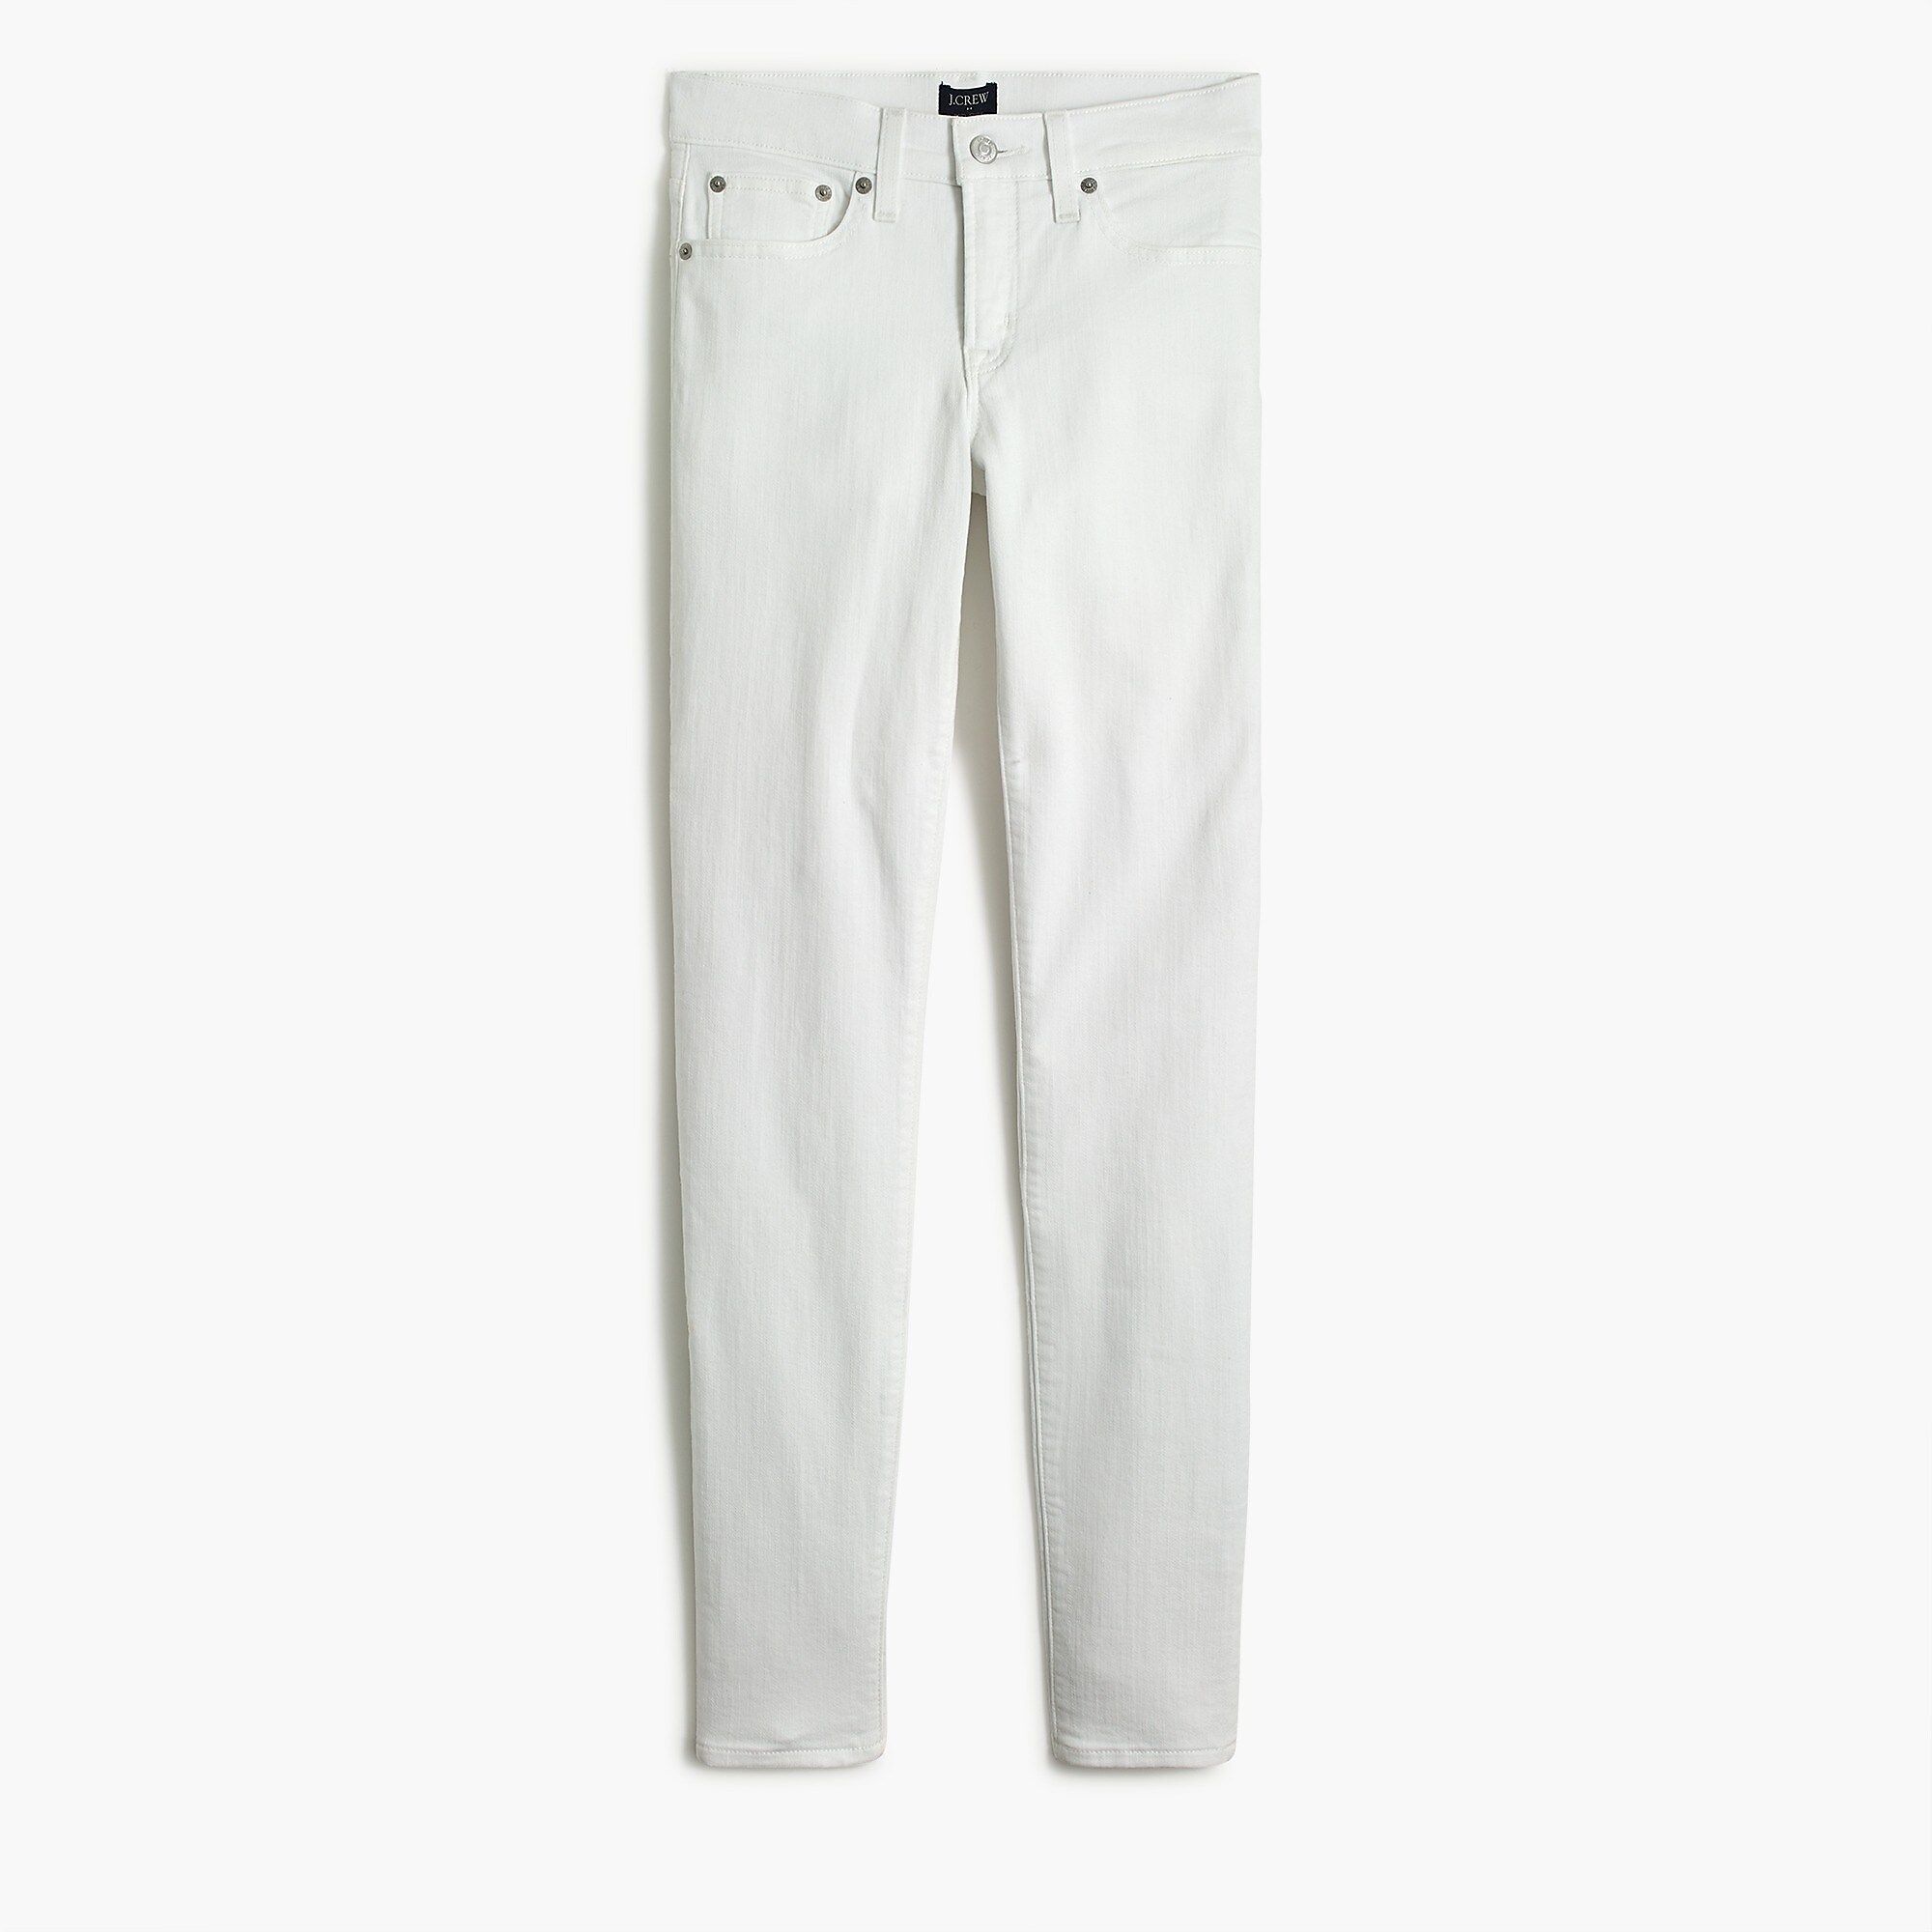 8" midrise skinny jean in white | J.Crew Factory